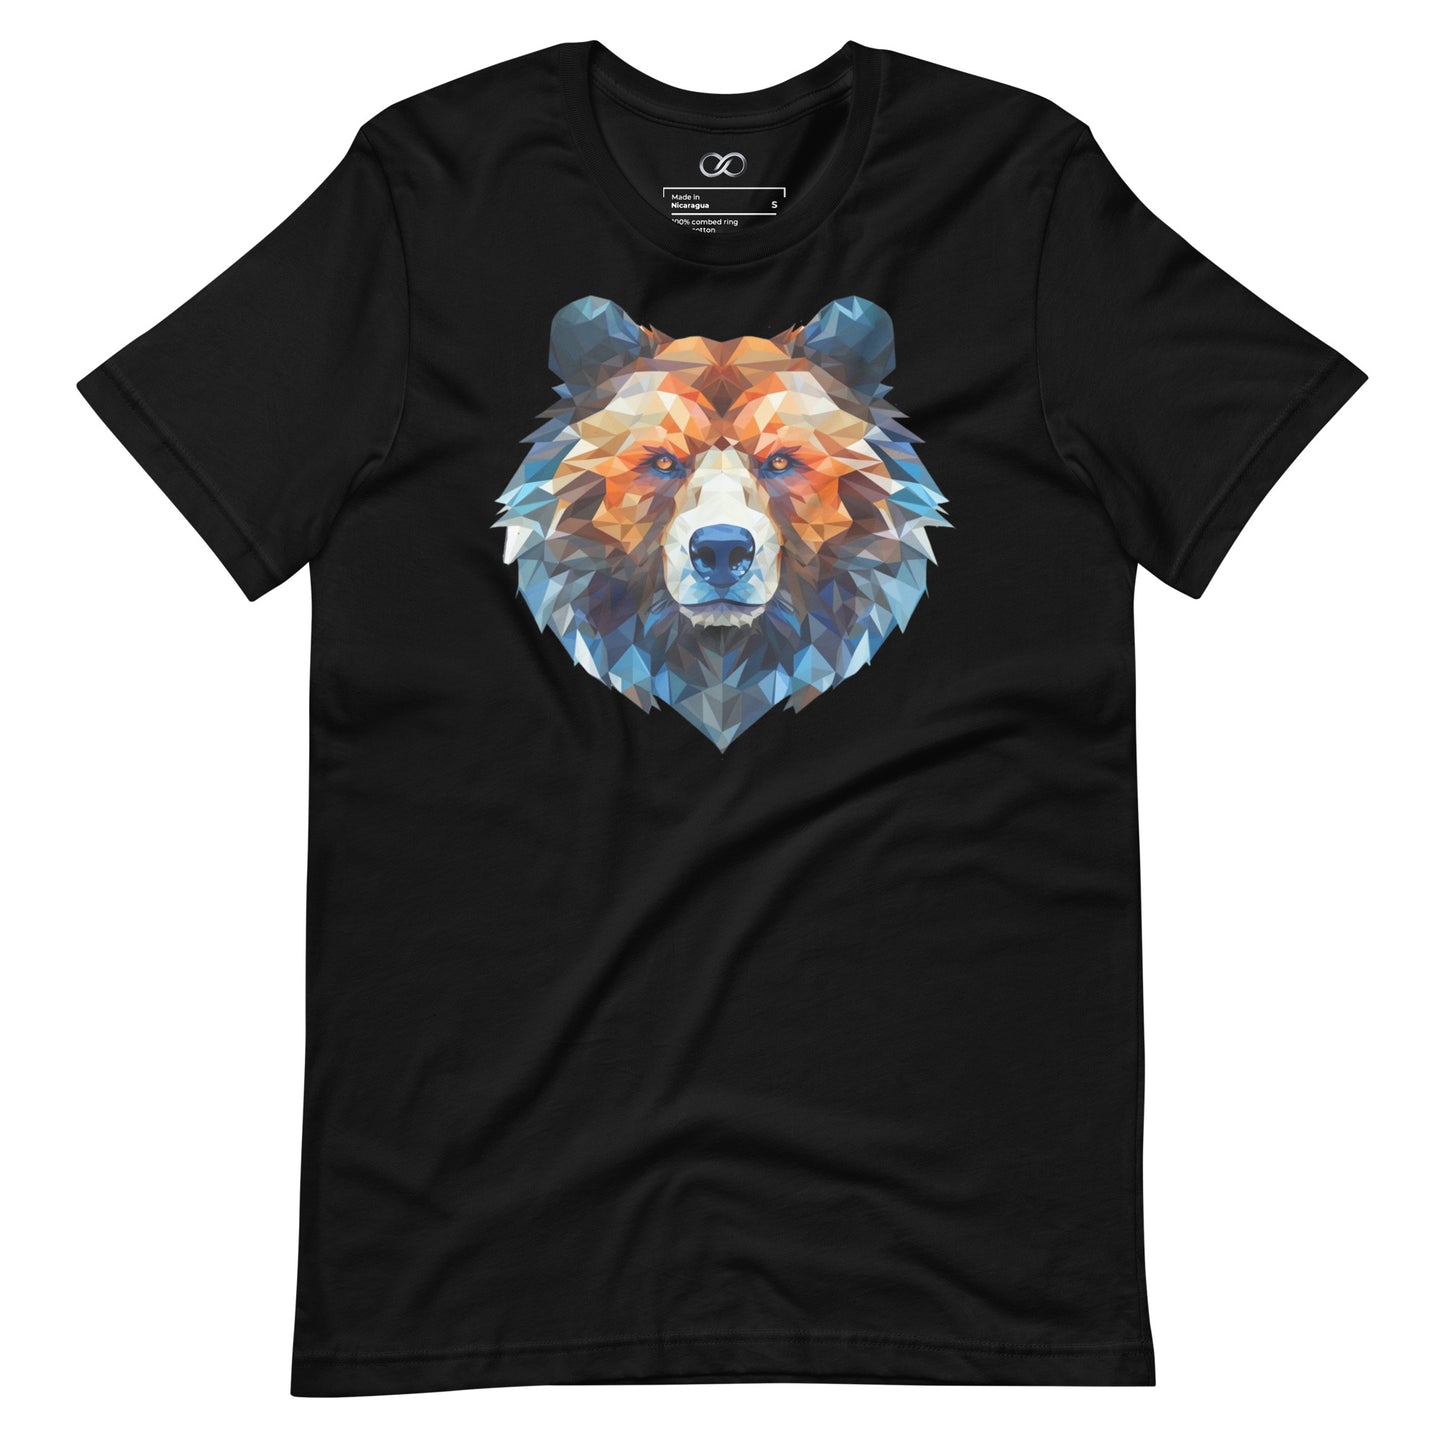 Geometric Bear Graphic T-Shirt - Abstract Animal Tee